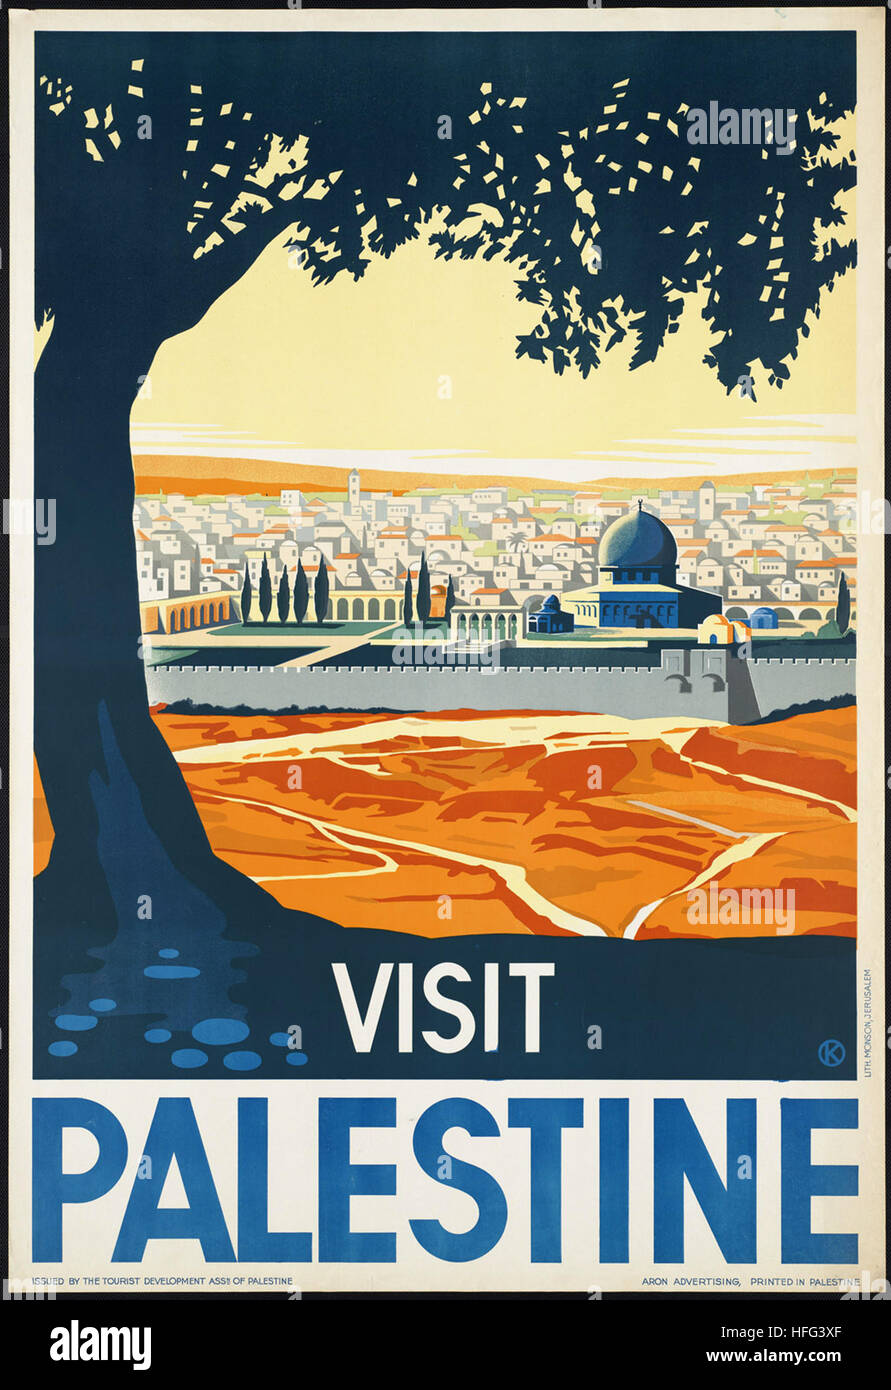 Vintage Travel Poster - Visit Palestine Stock Photo